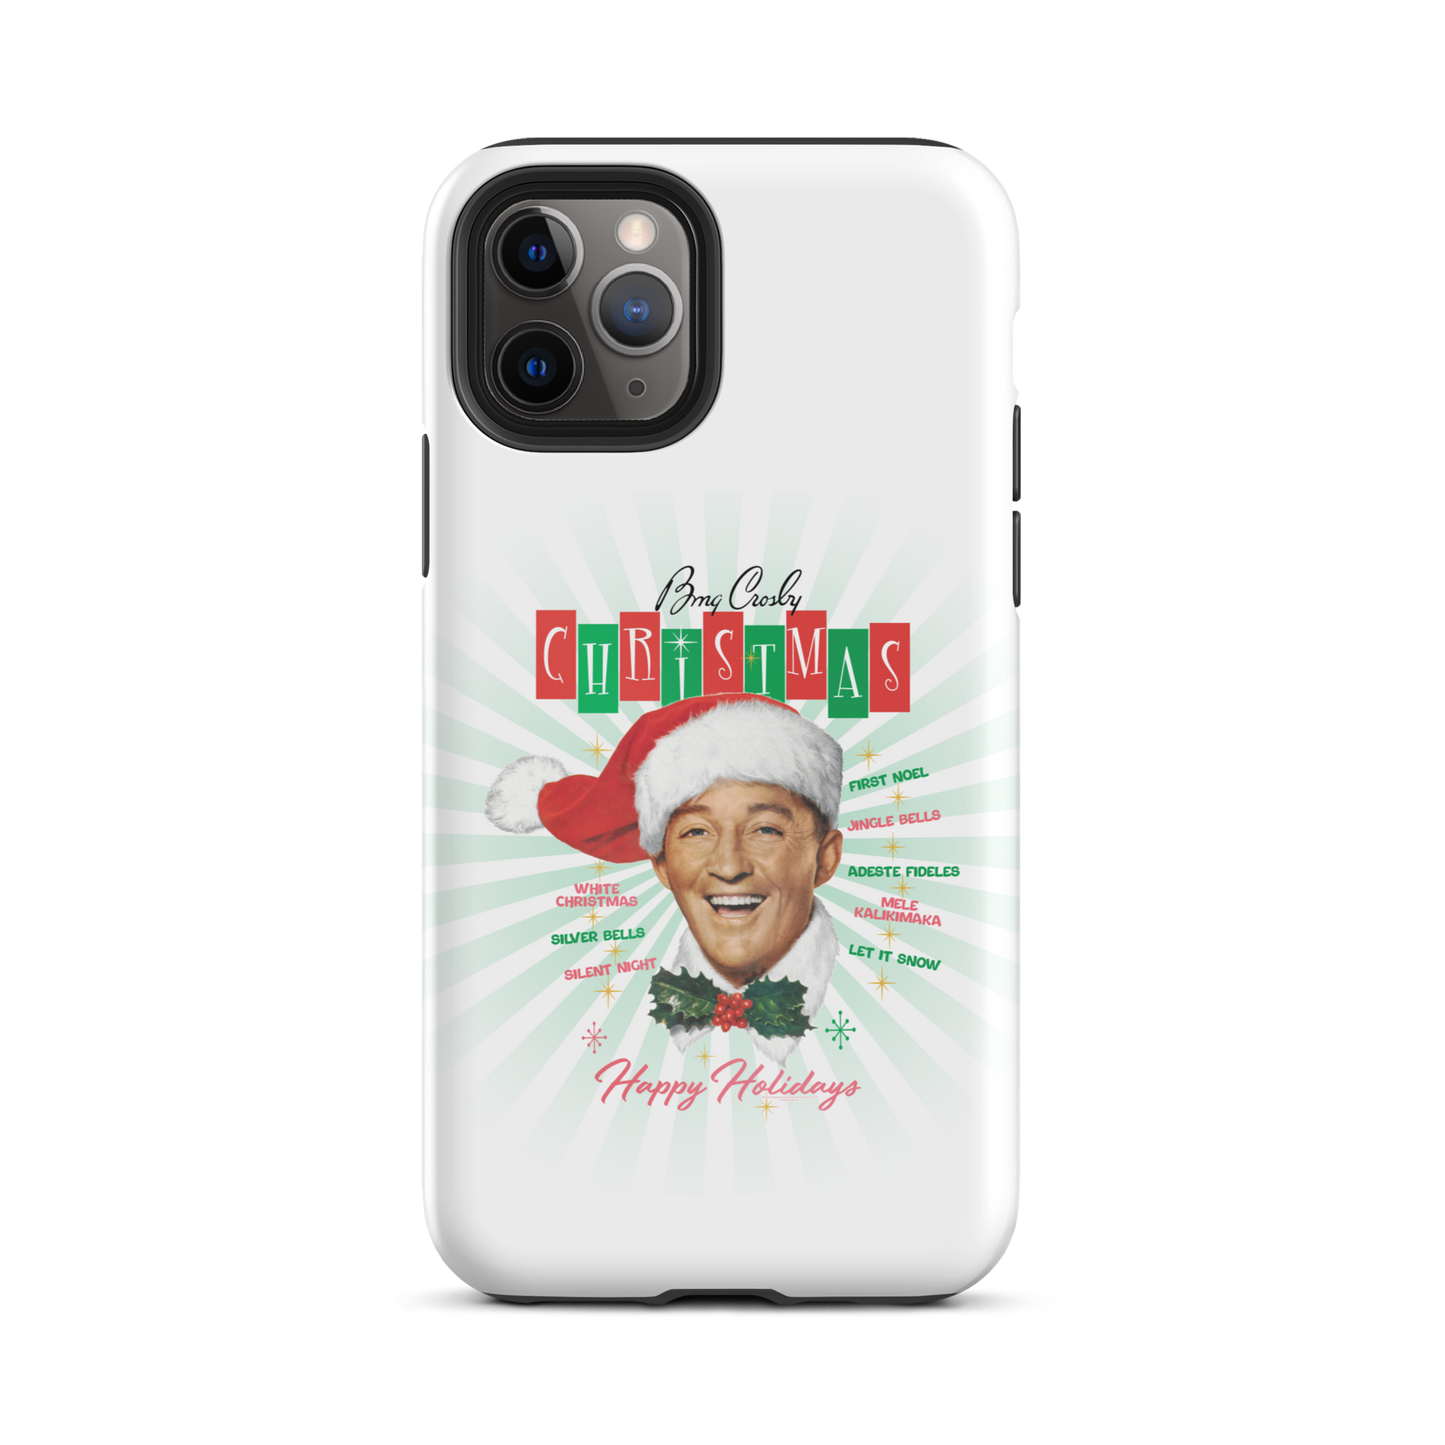 Bing Crosby Christmas iPhone Case